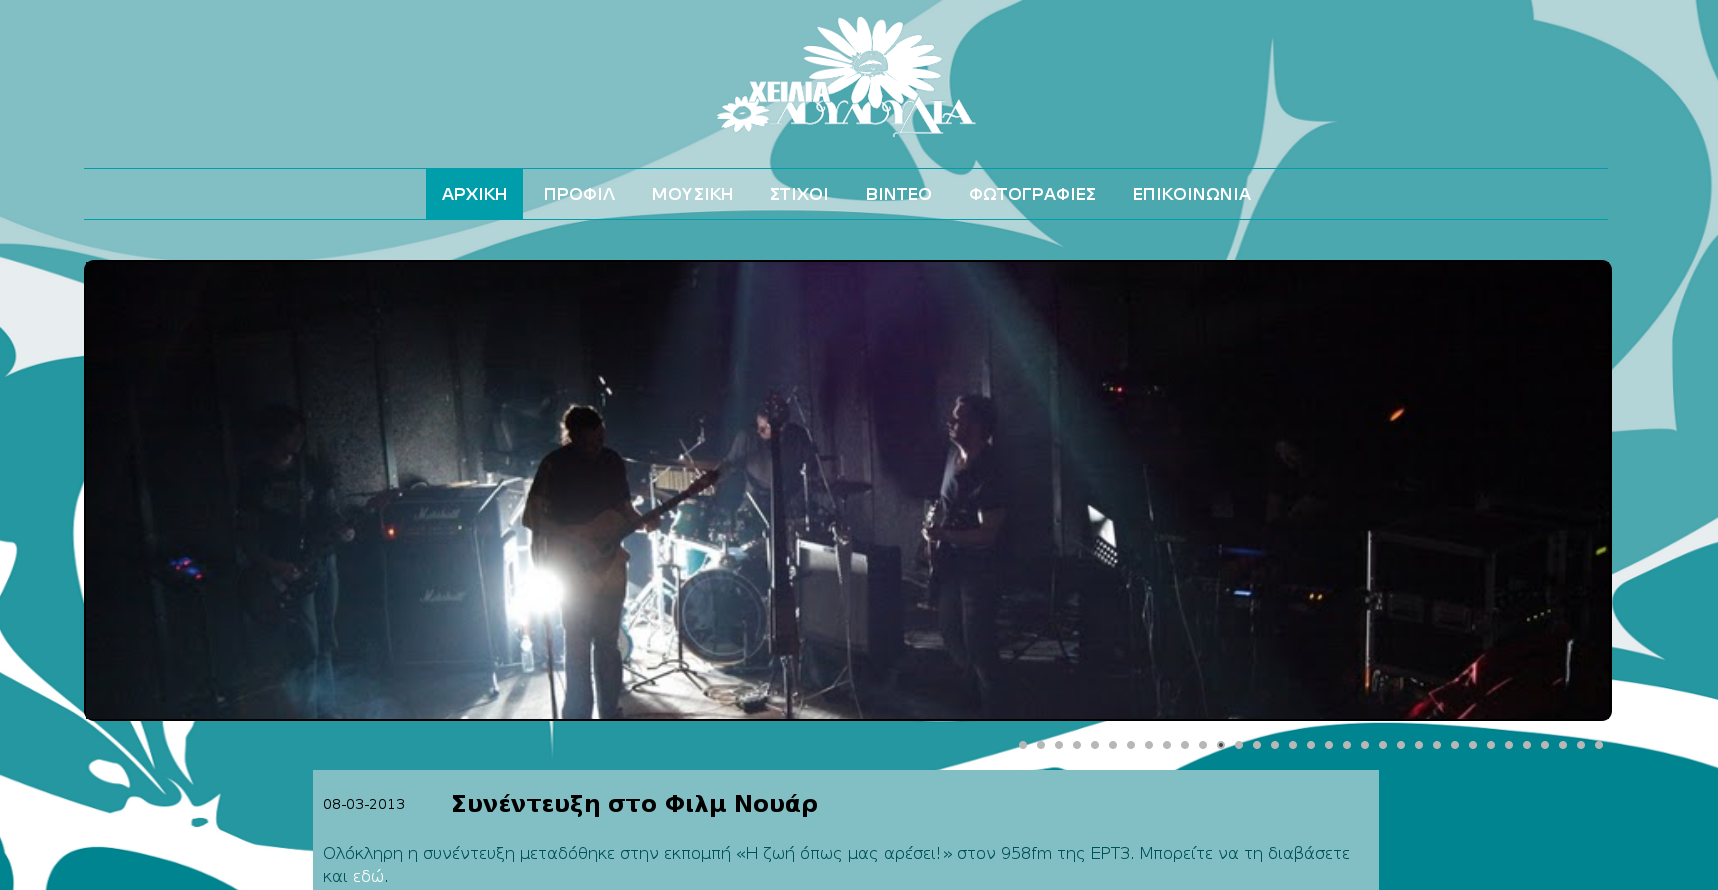 xeilialouloudia music band web page